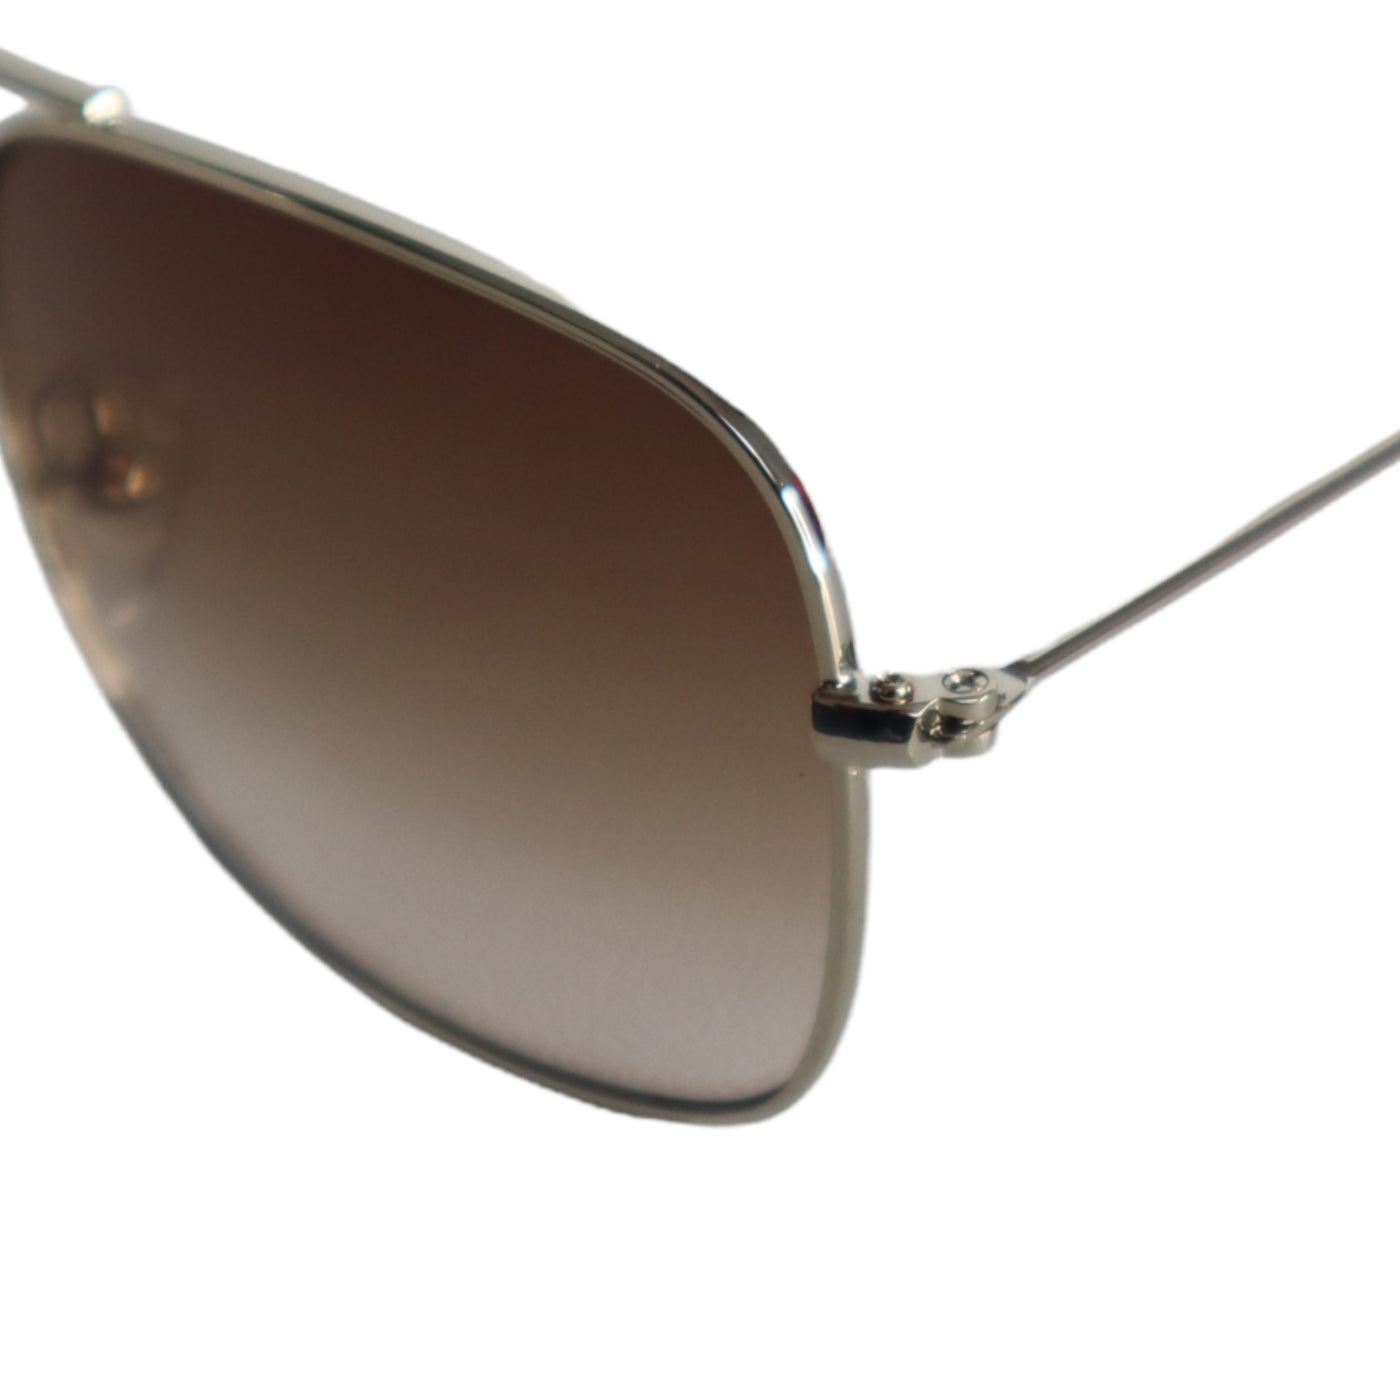 AIR FORCE AVIATOR SERIES SILVER Color Metal Frames Sunglasses w/ BROWN Lens